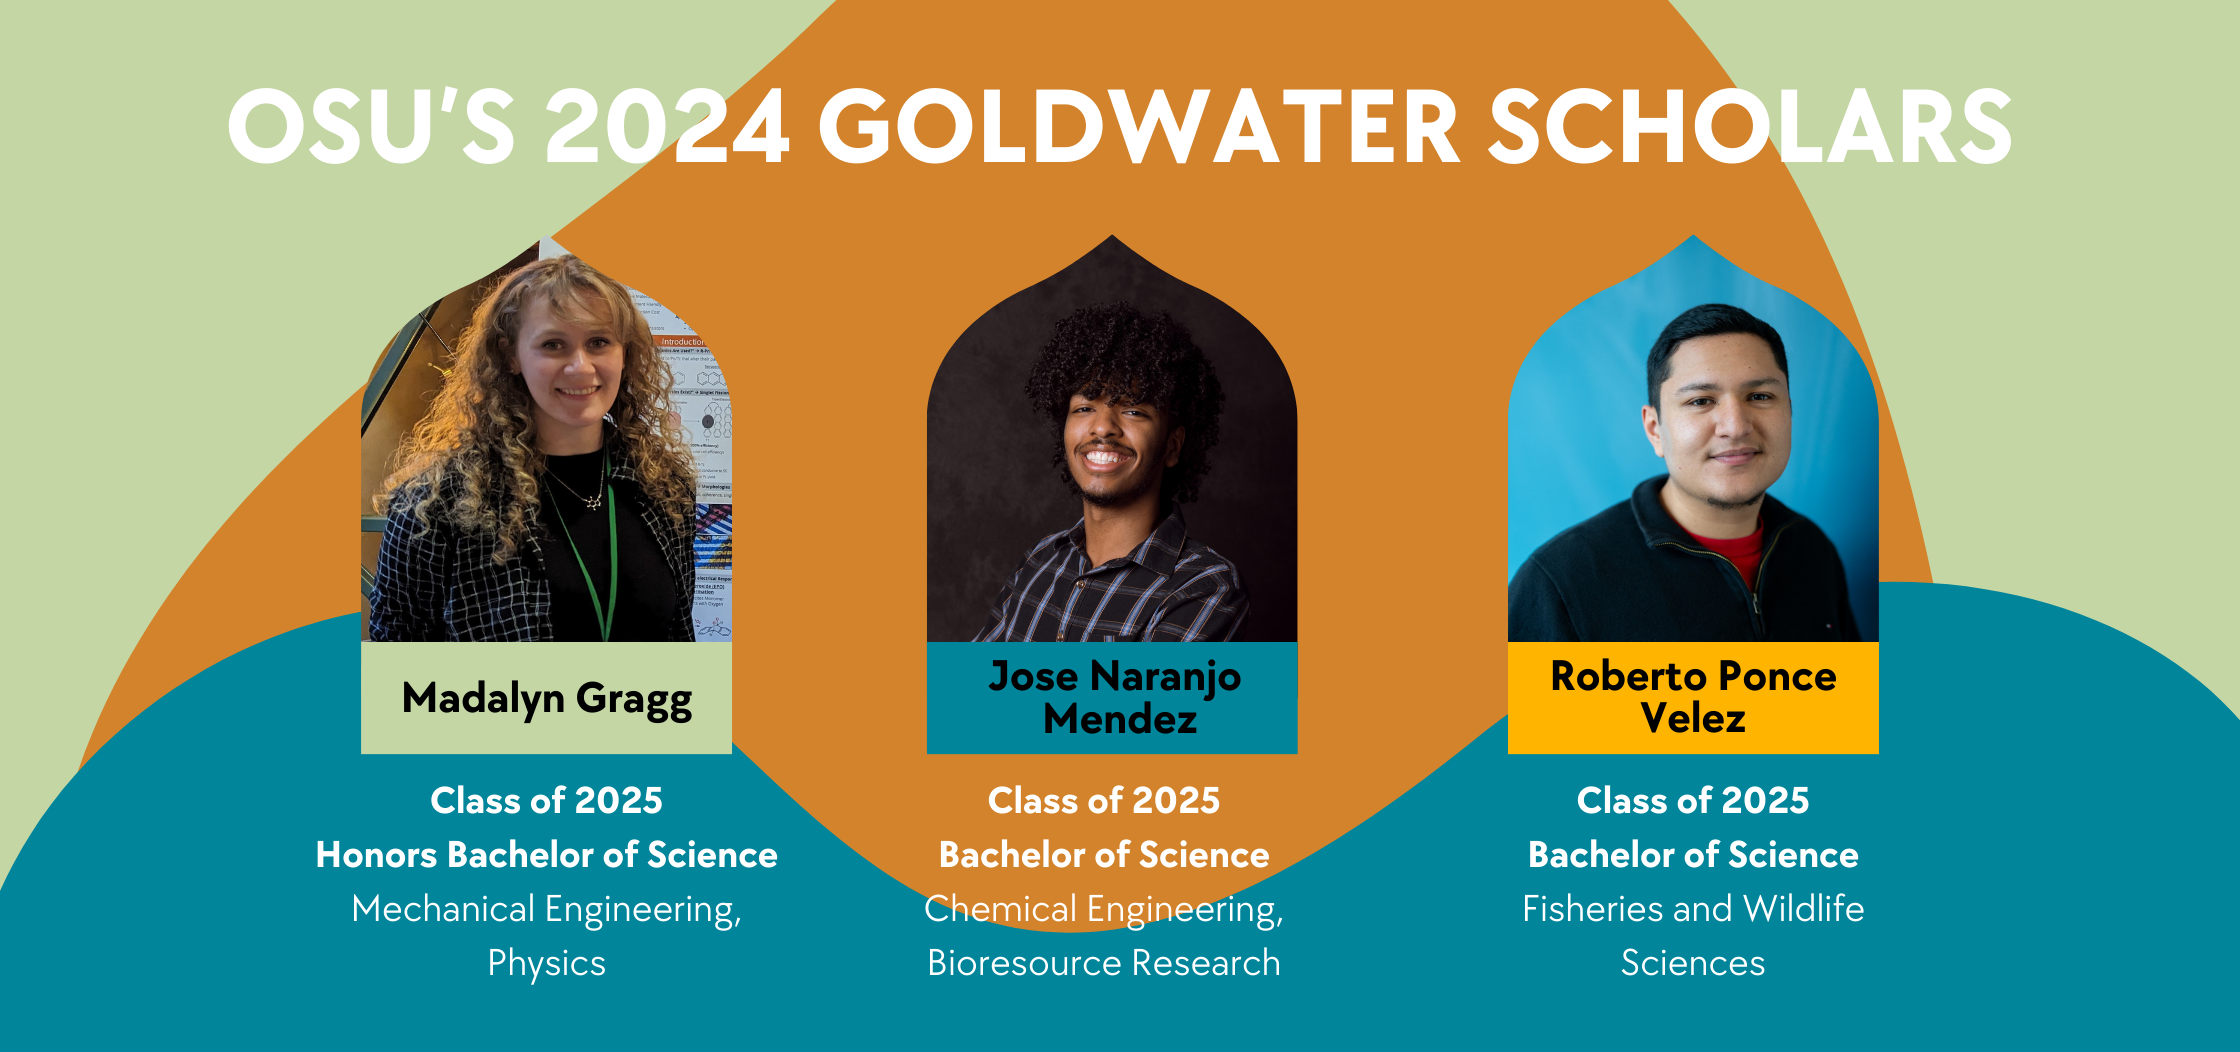 2024 Goldwater Scholars: Madalyn Gragg, Jose Naranjo Mendez, Roberto Ponce Velez